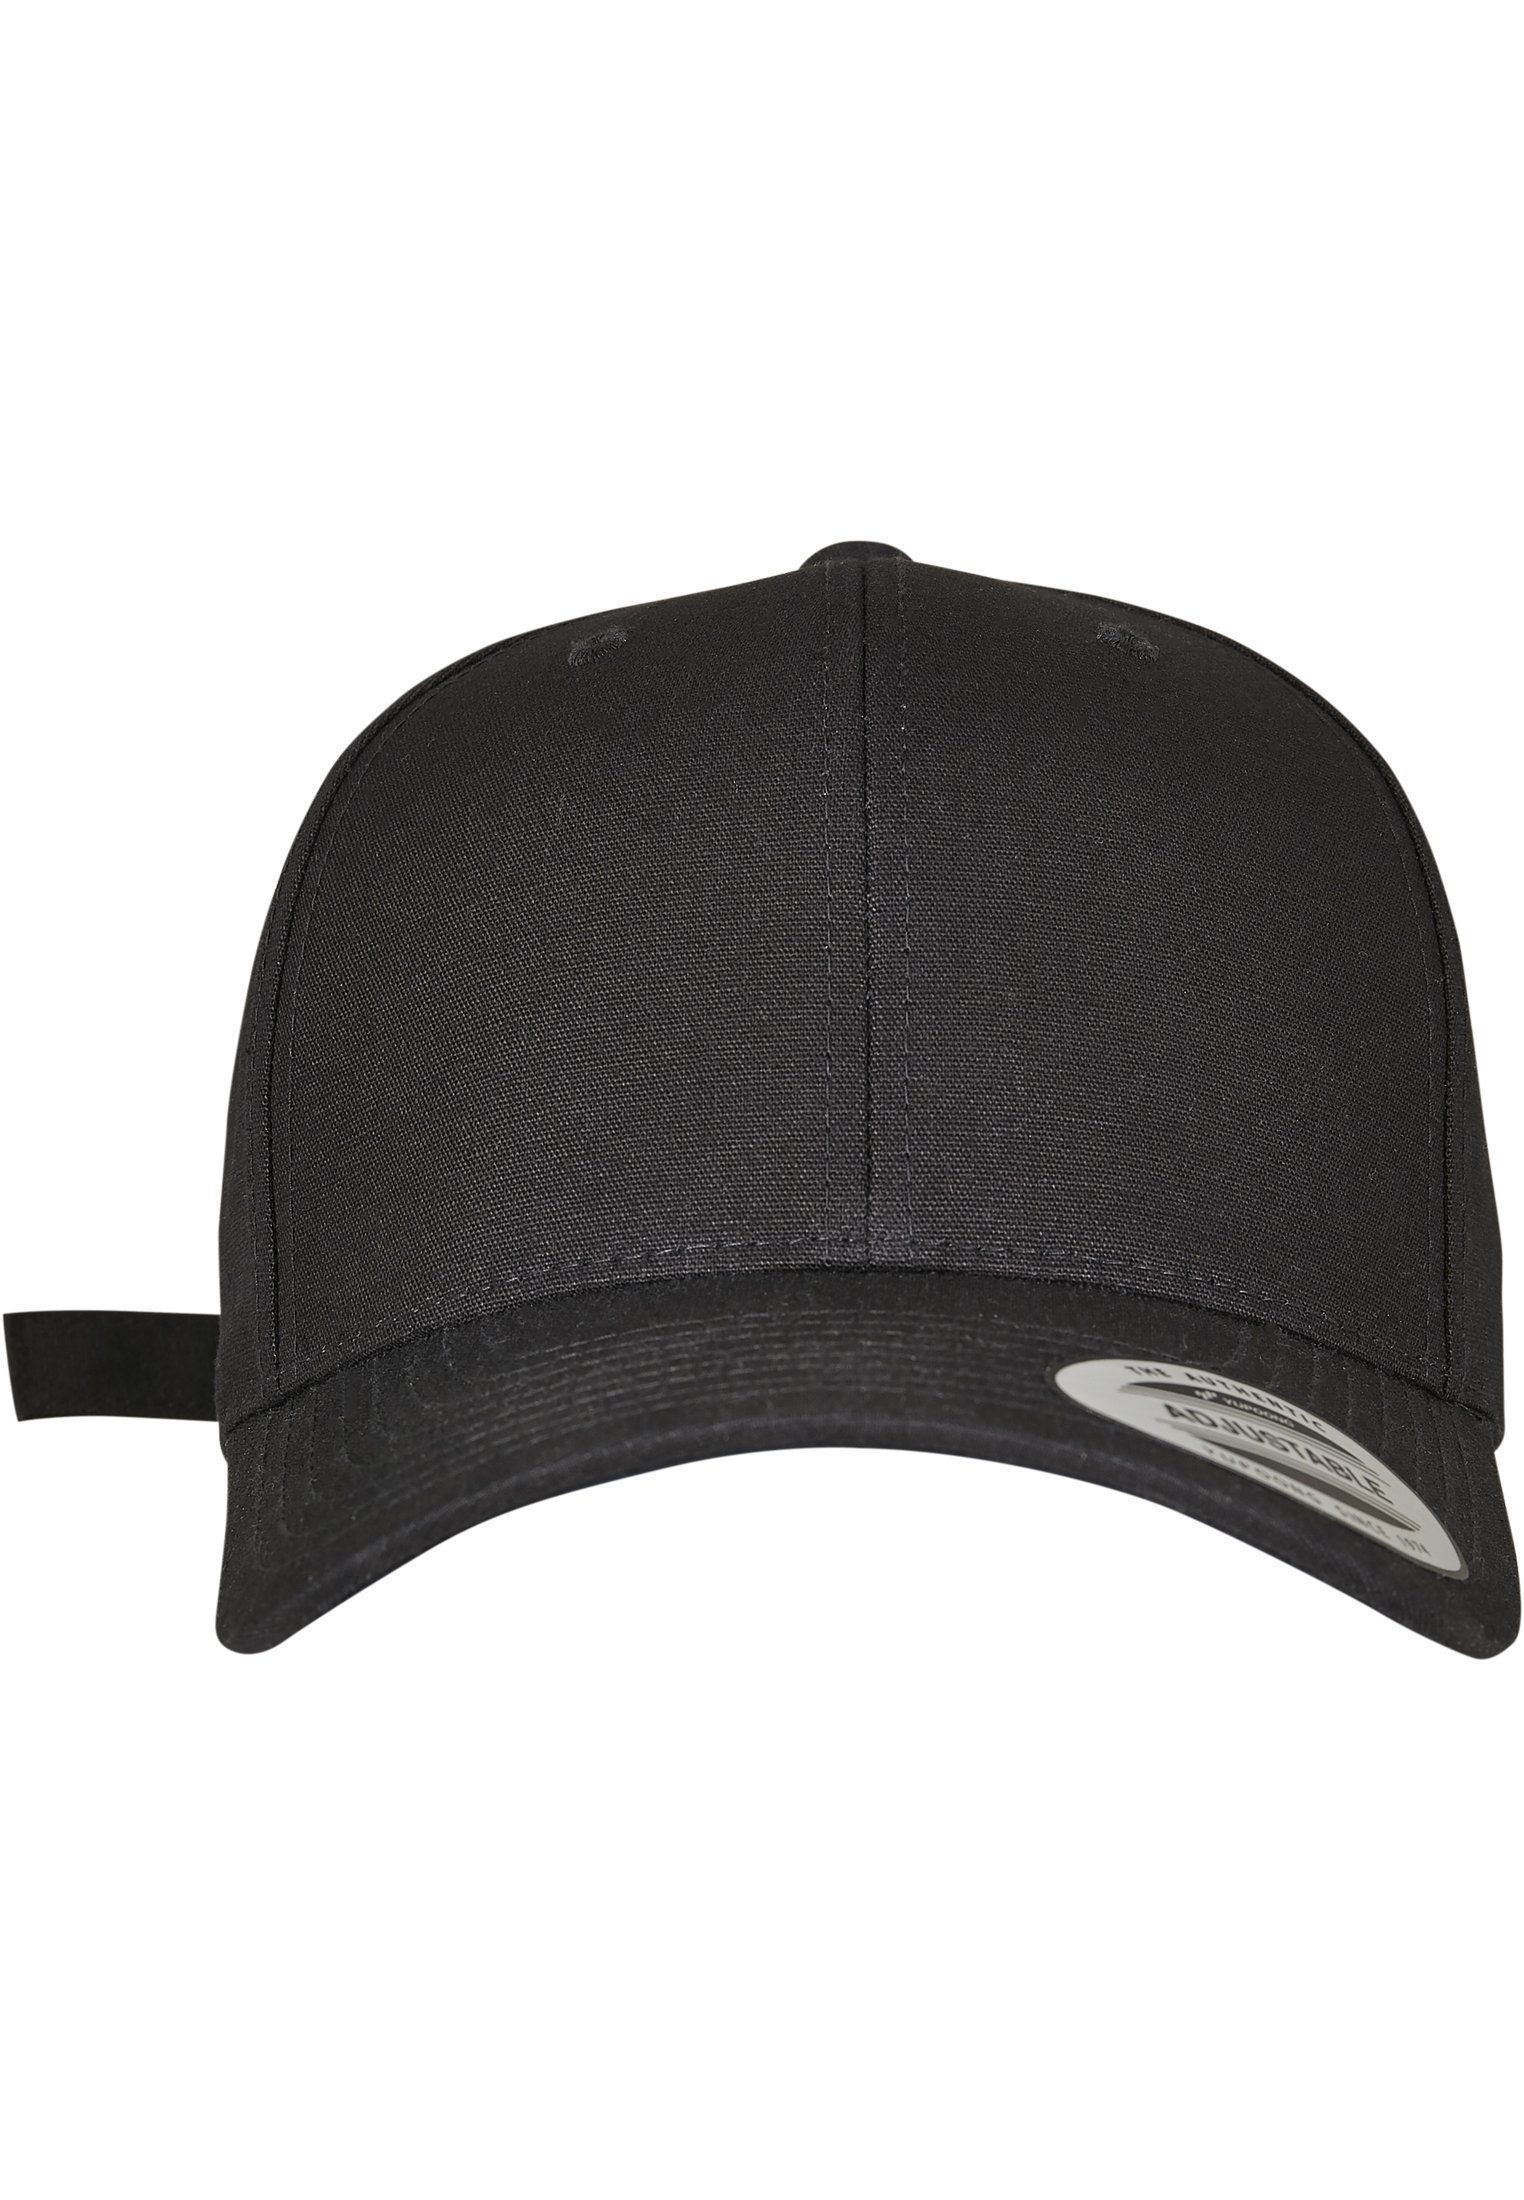 Flex Snap Metal 6-Panel Cap Snapback black Flexfit Curved